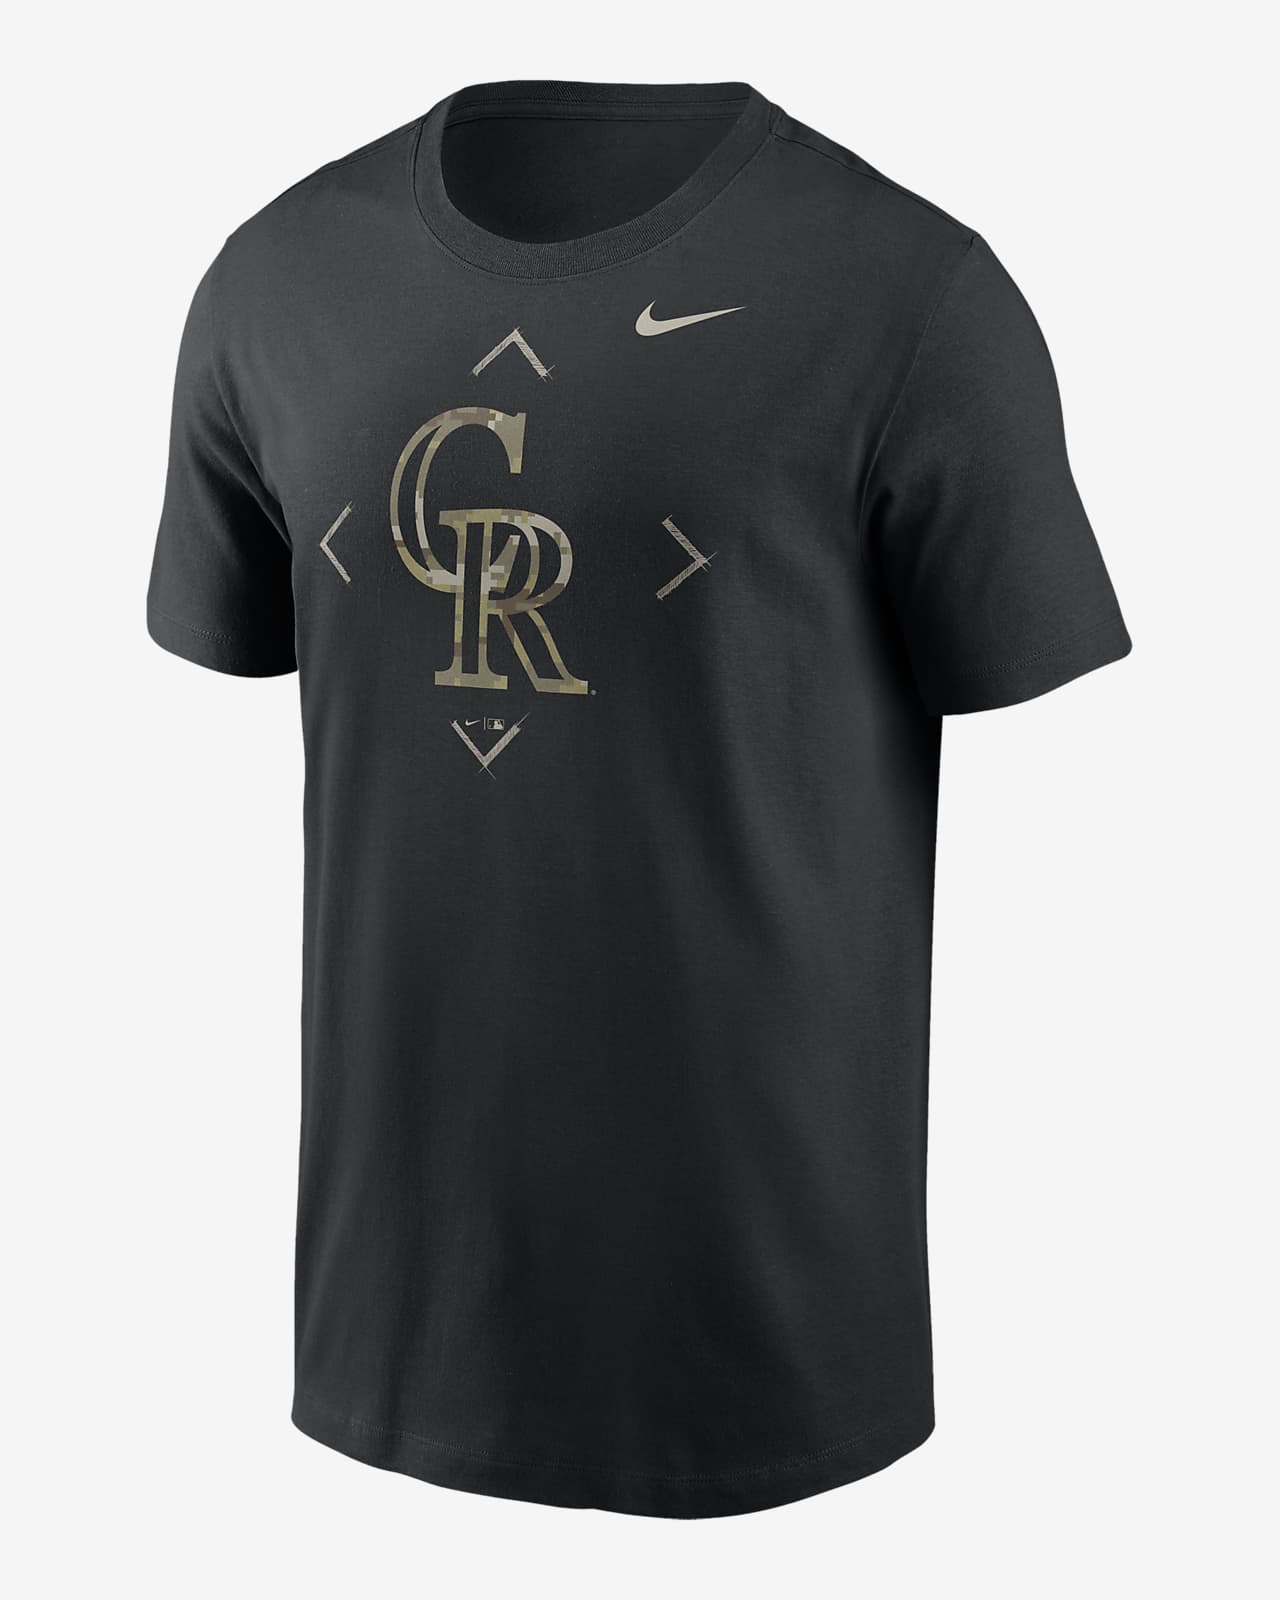 MLB Colorado Rockies Girls' Crew Neck T-Shirt - XS